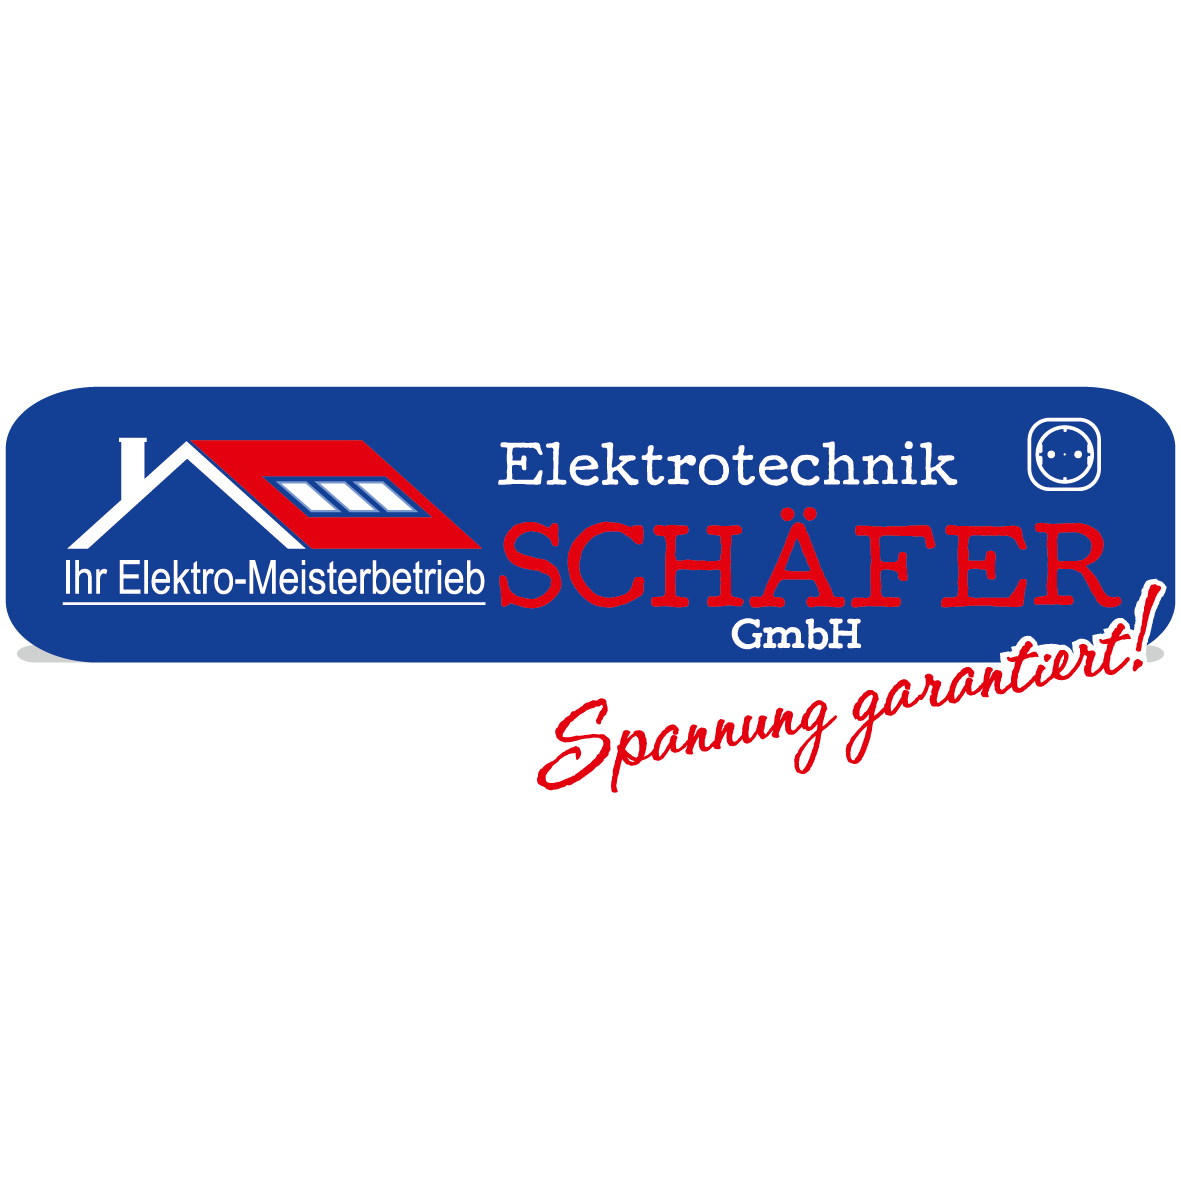 Elektrotechnik Schäfer GmbH in Schwanewede - Logo